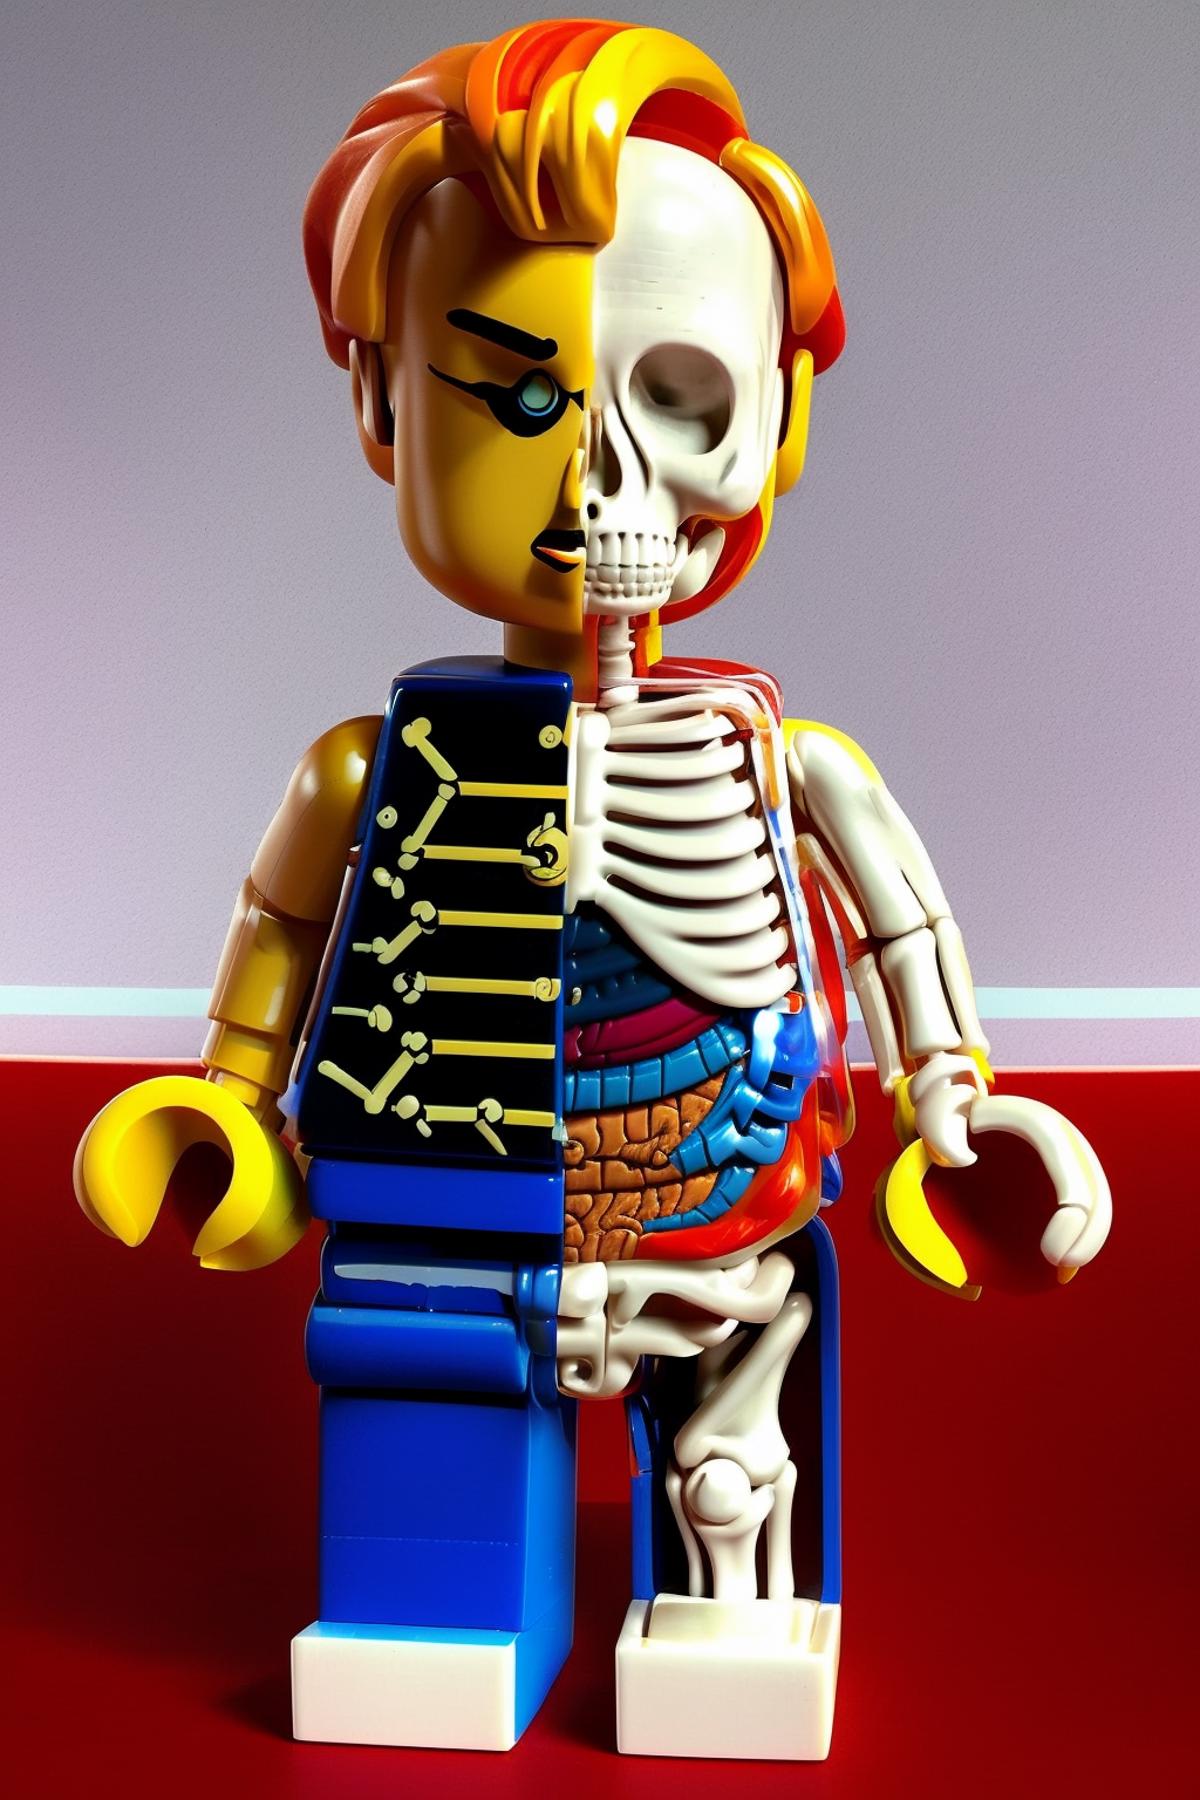 Skeleton Toy image by Ciro_Negrogni